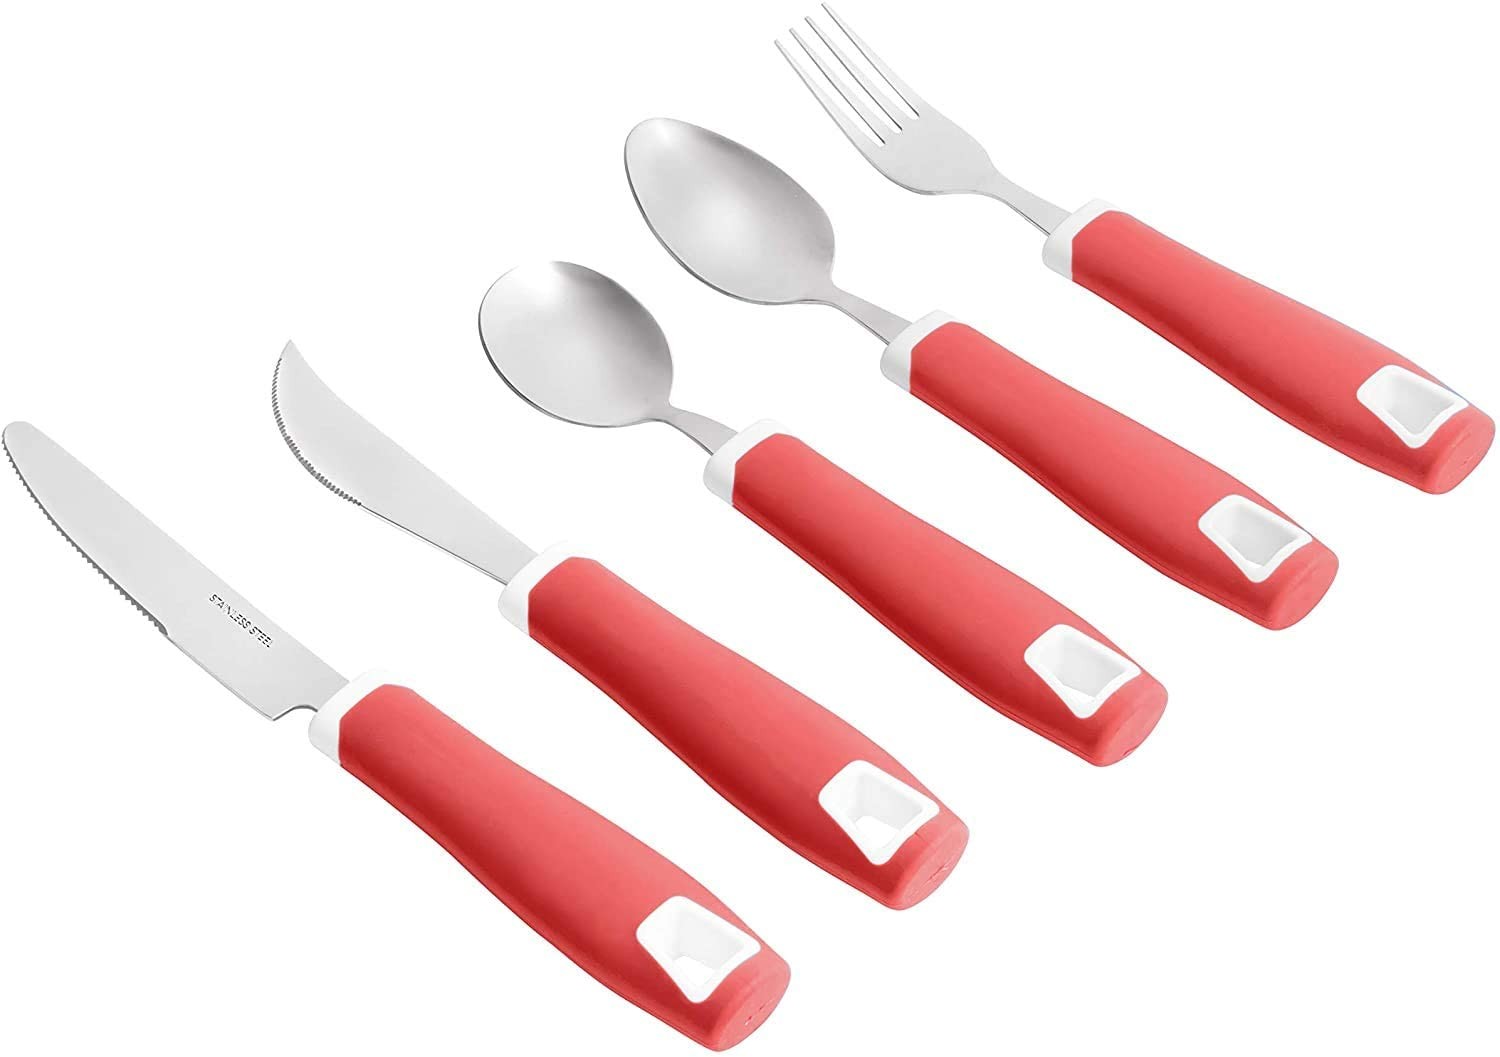 Set of 5 Red Adaptive Utensils - Stainless Steel Knife, Rocker Knife, Fork,  Soup Spoon, Dinner Spoon